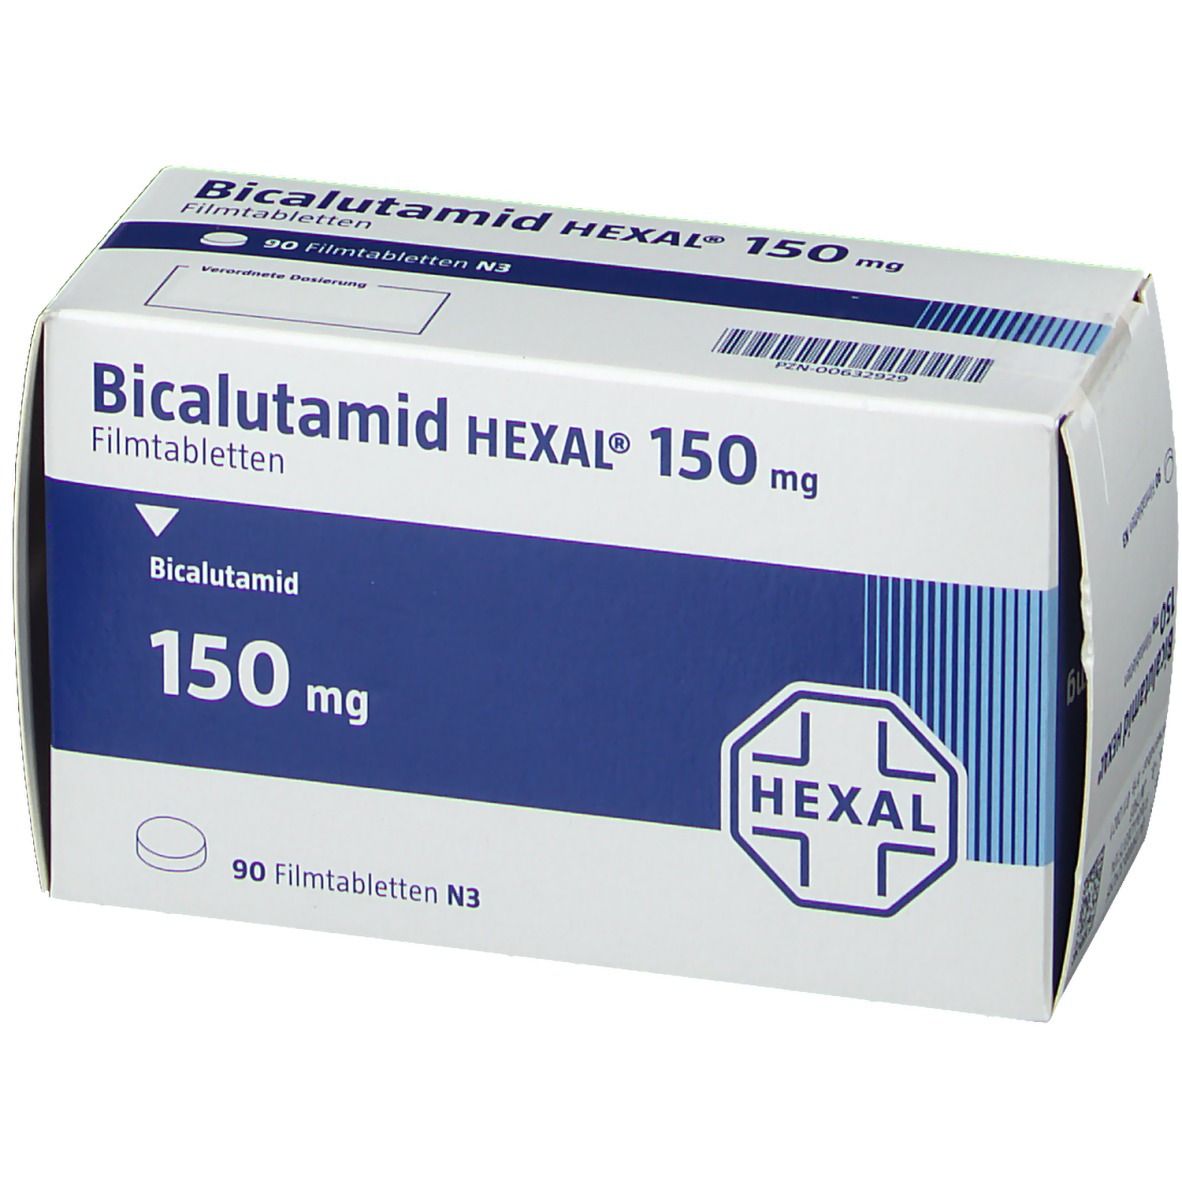 Bicalutamid HEXAL® 150 mg